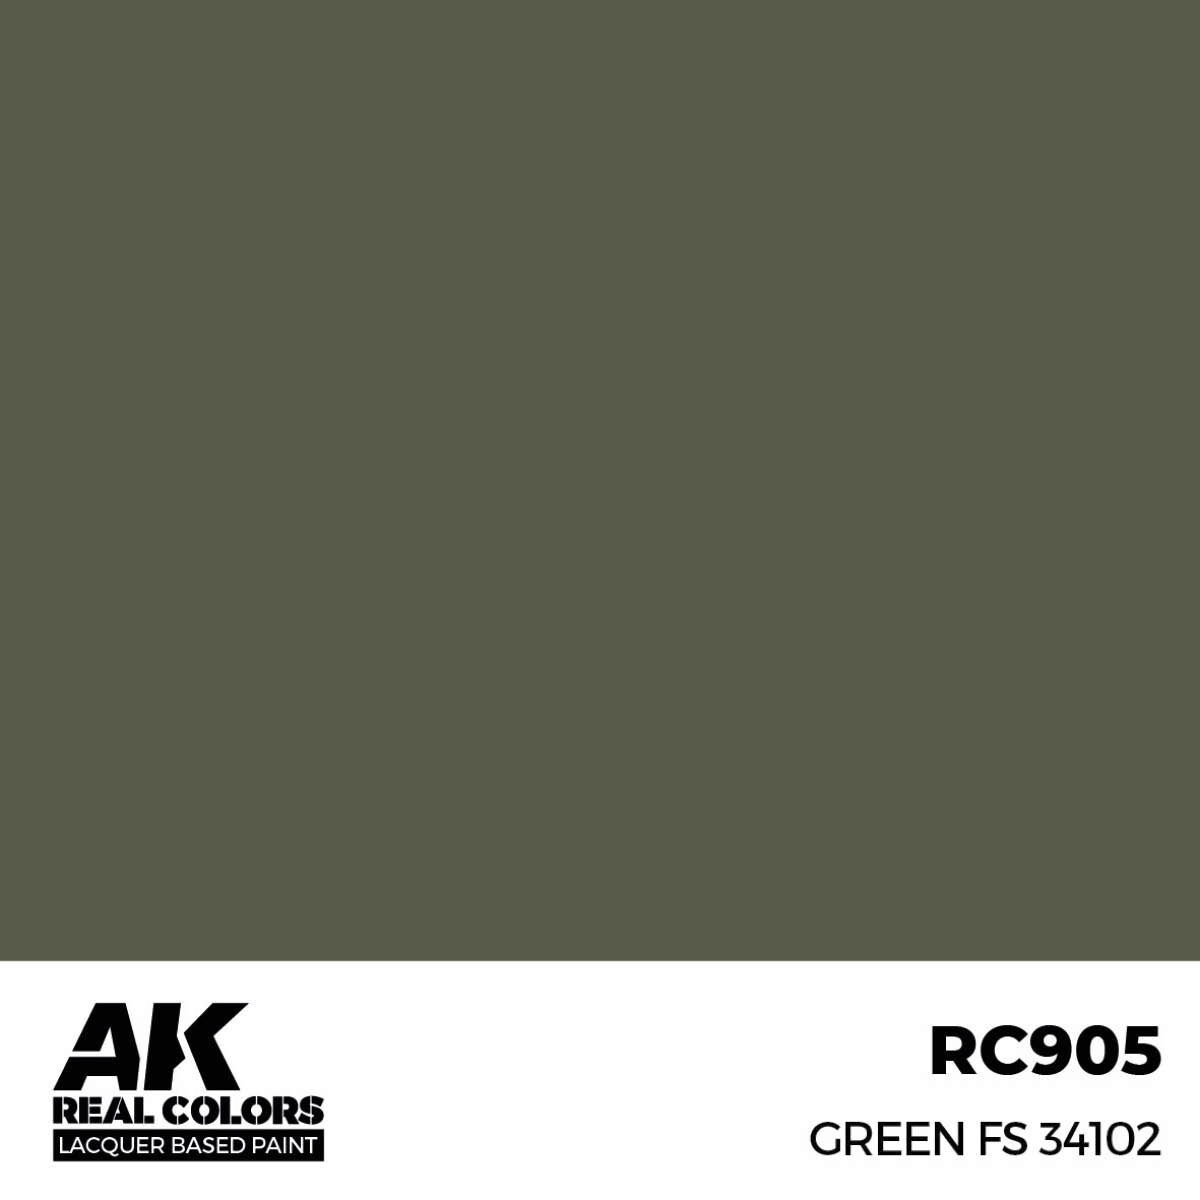 AK RC905 Real Colors Green FS 34102 17 ml.